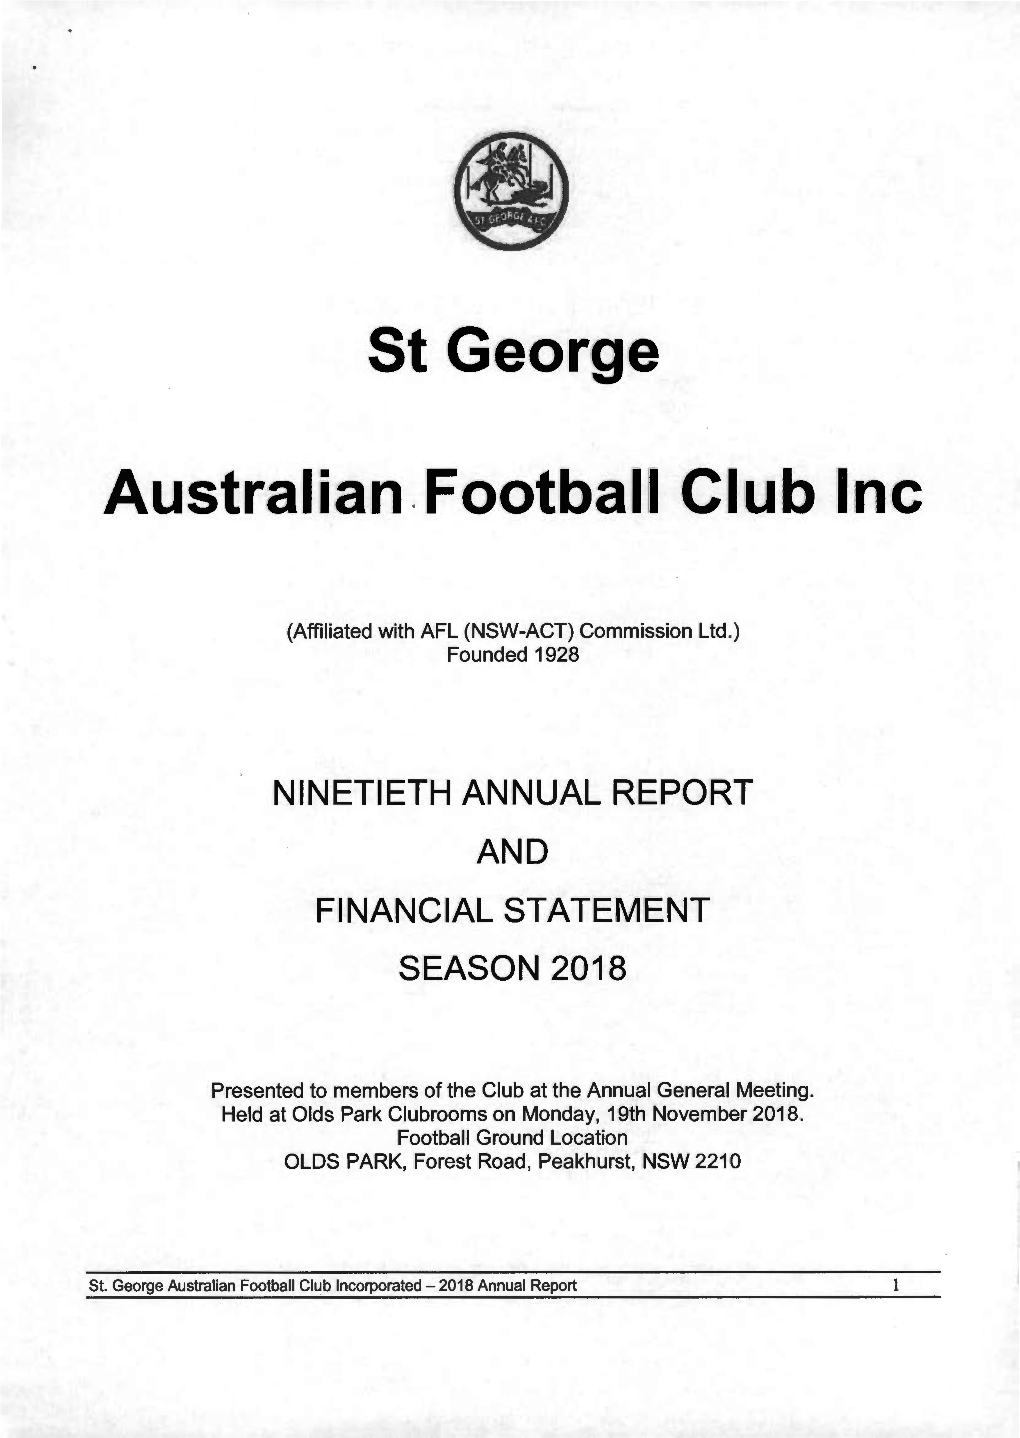 St George Australian. Football Club